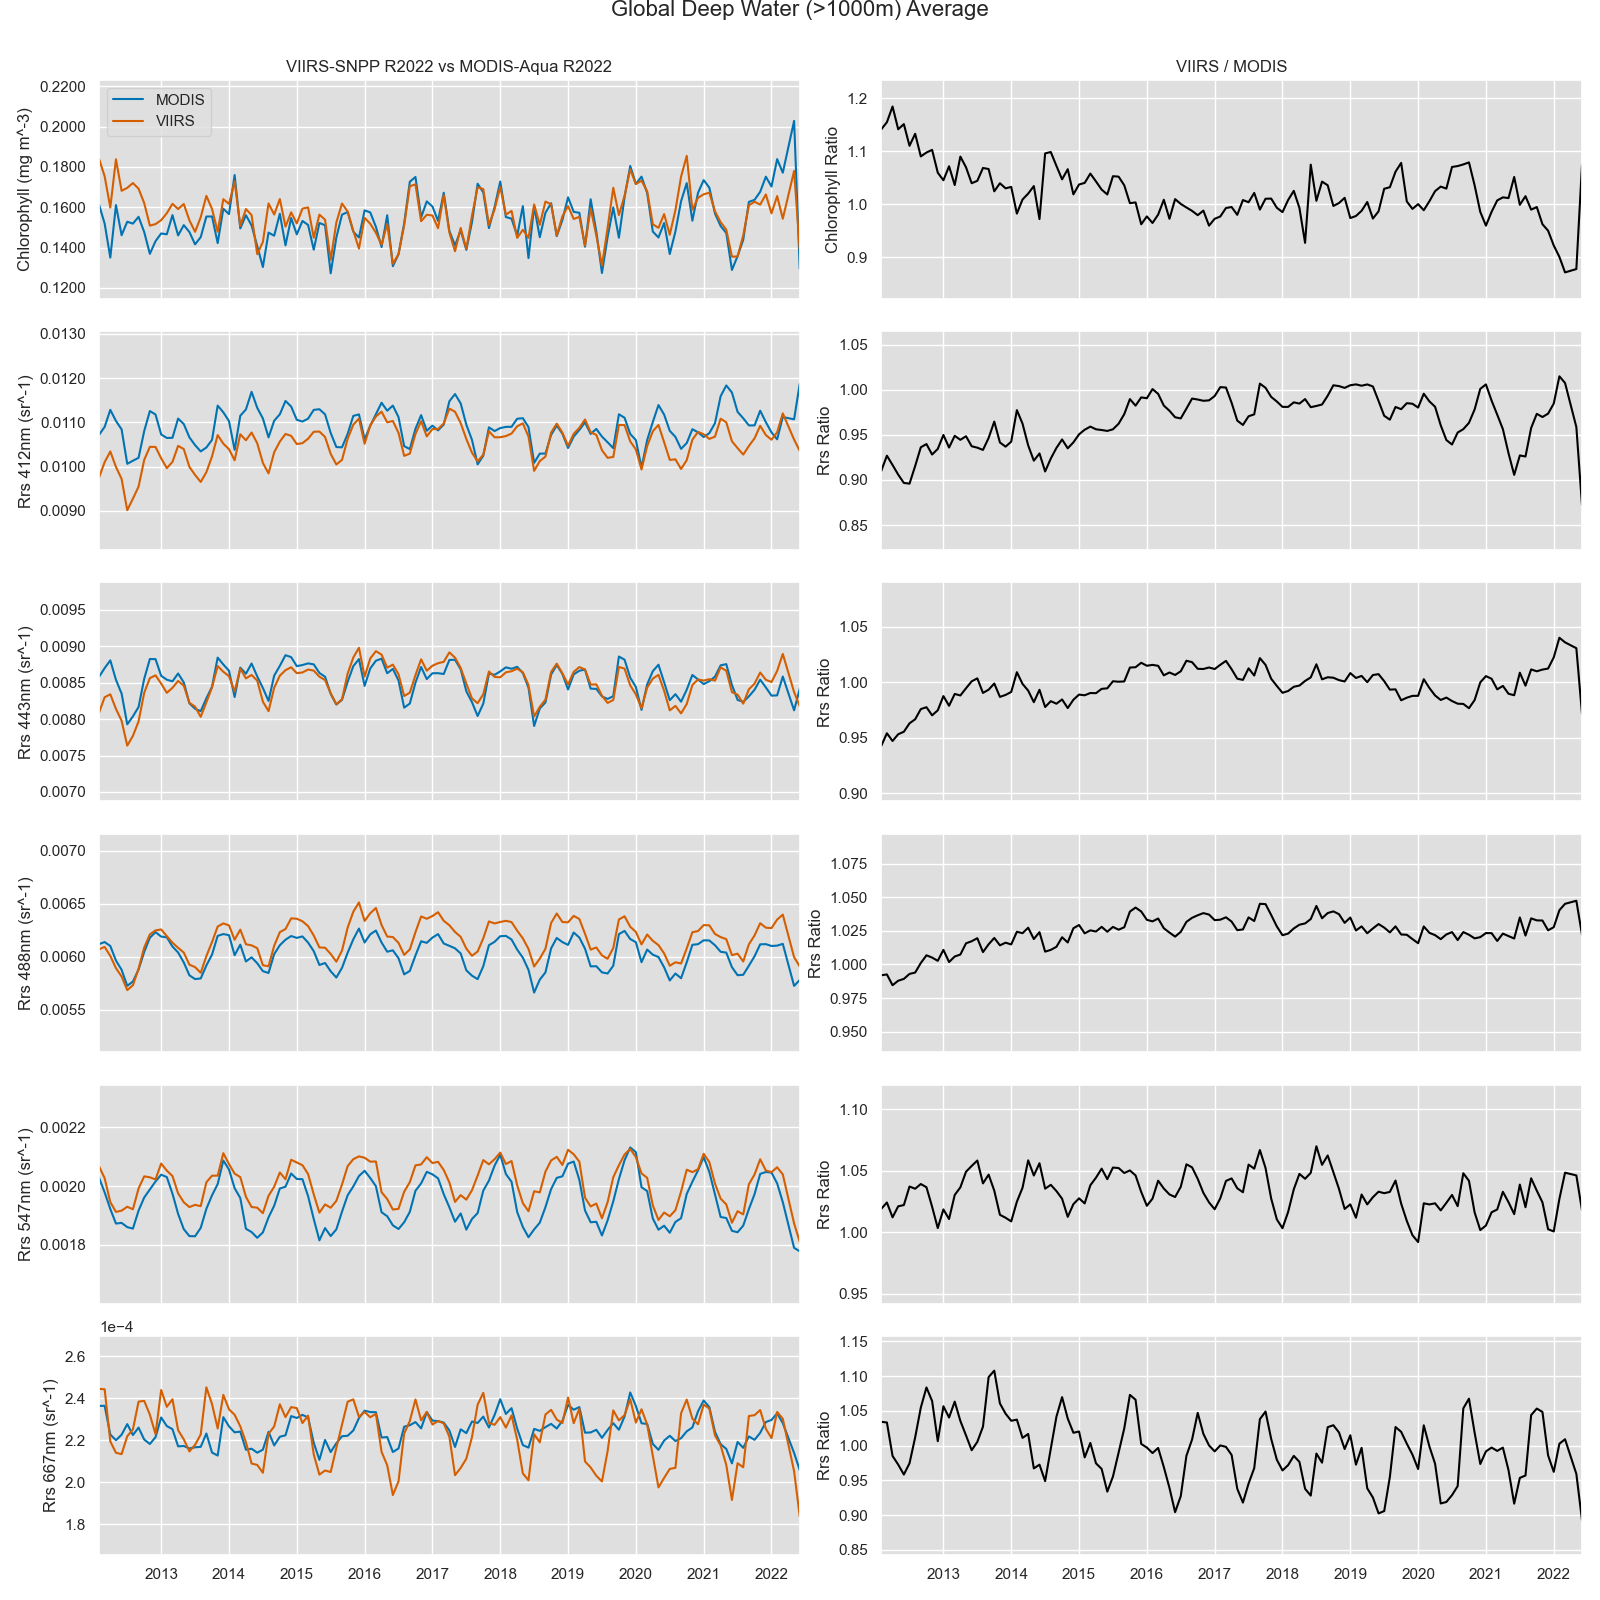 Deep water time series comparisons of VIIRS-SNPP R2022 to MODIS-Aqua R2022